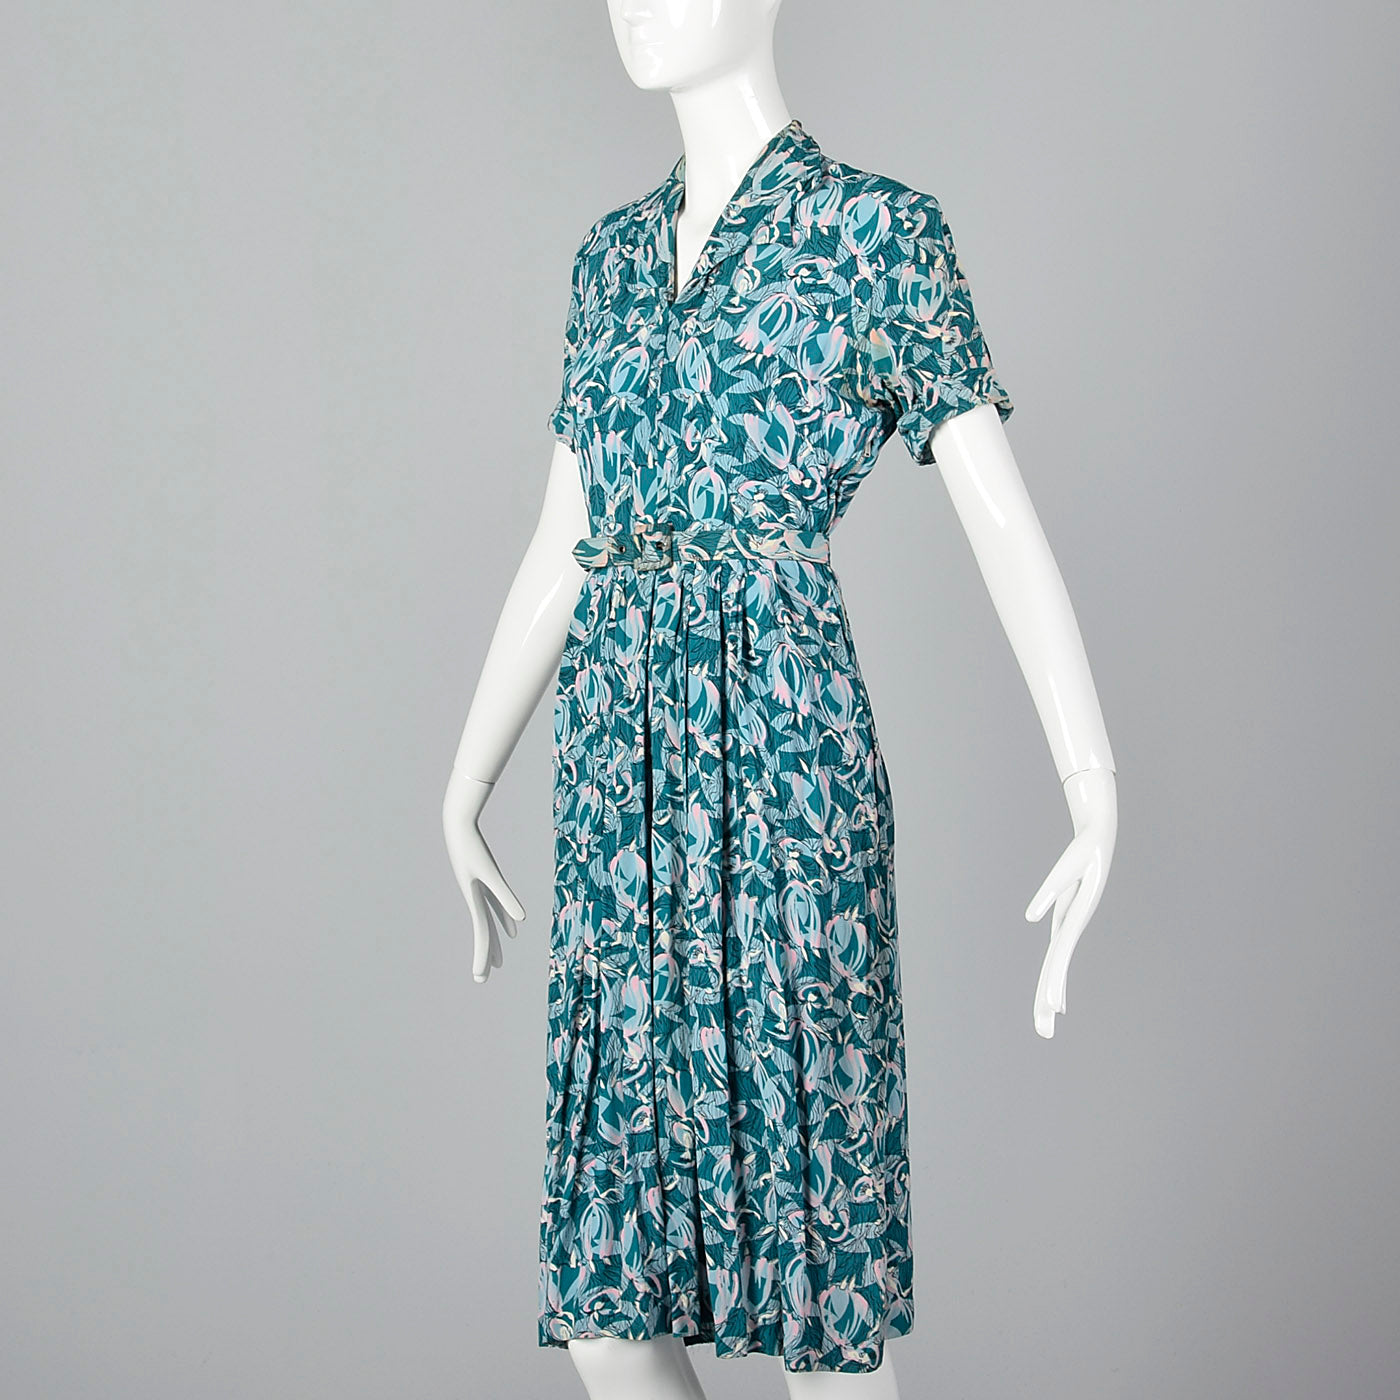 1940s Rayon Dress in Novelty Dancing Ladies Print